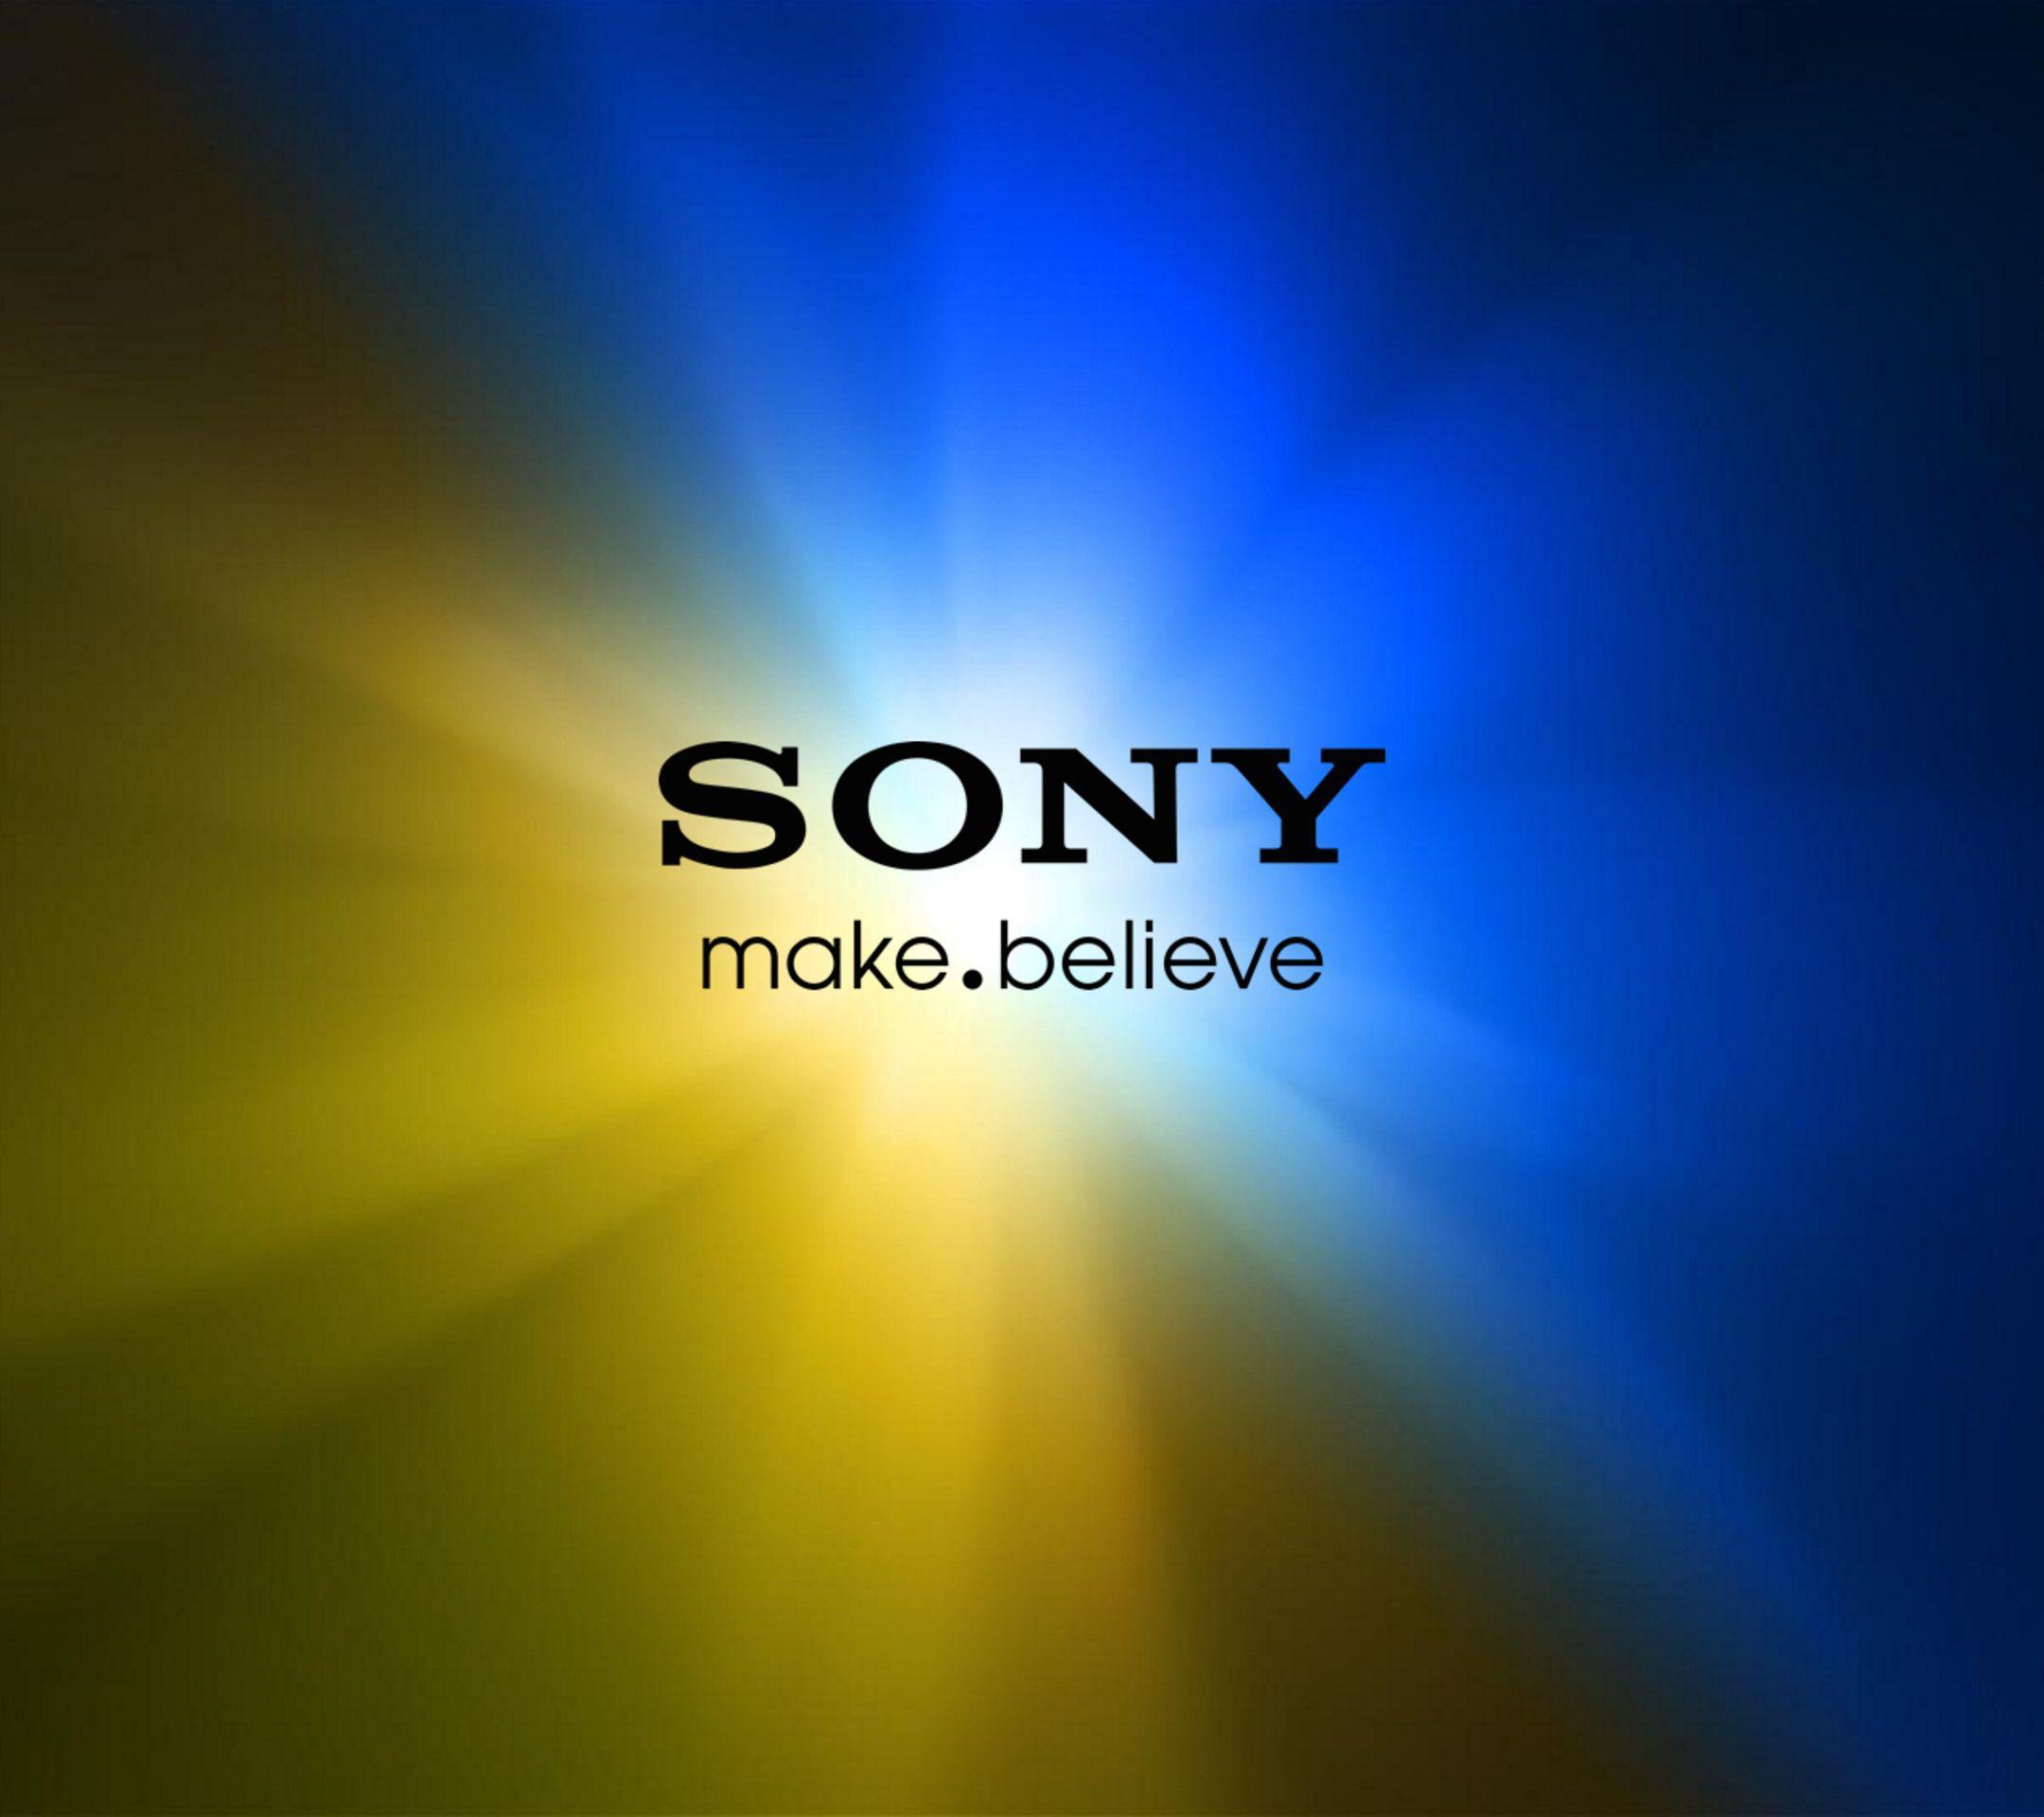 Sony 4K Logo Wallpapers - Top Free Sony